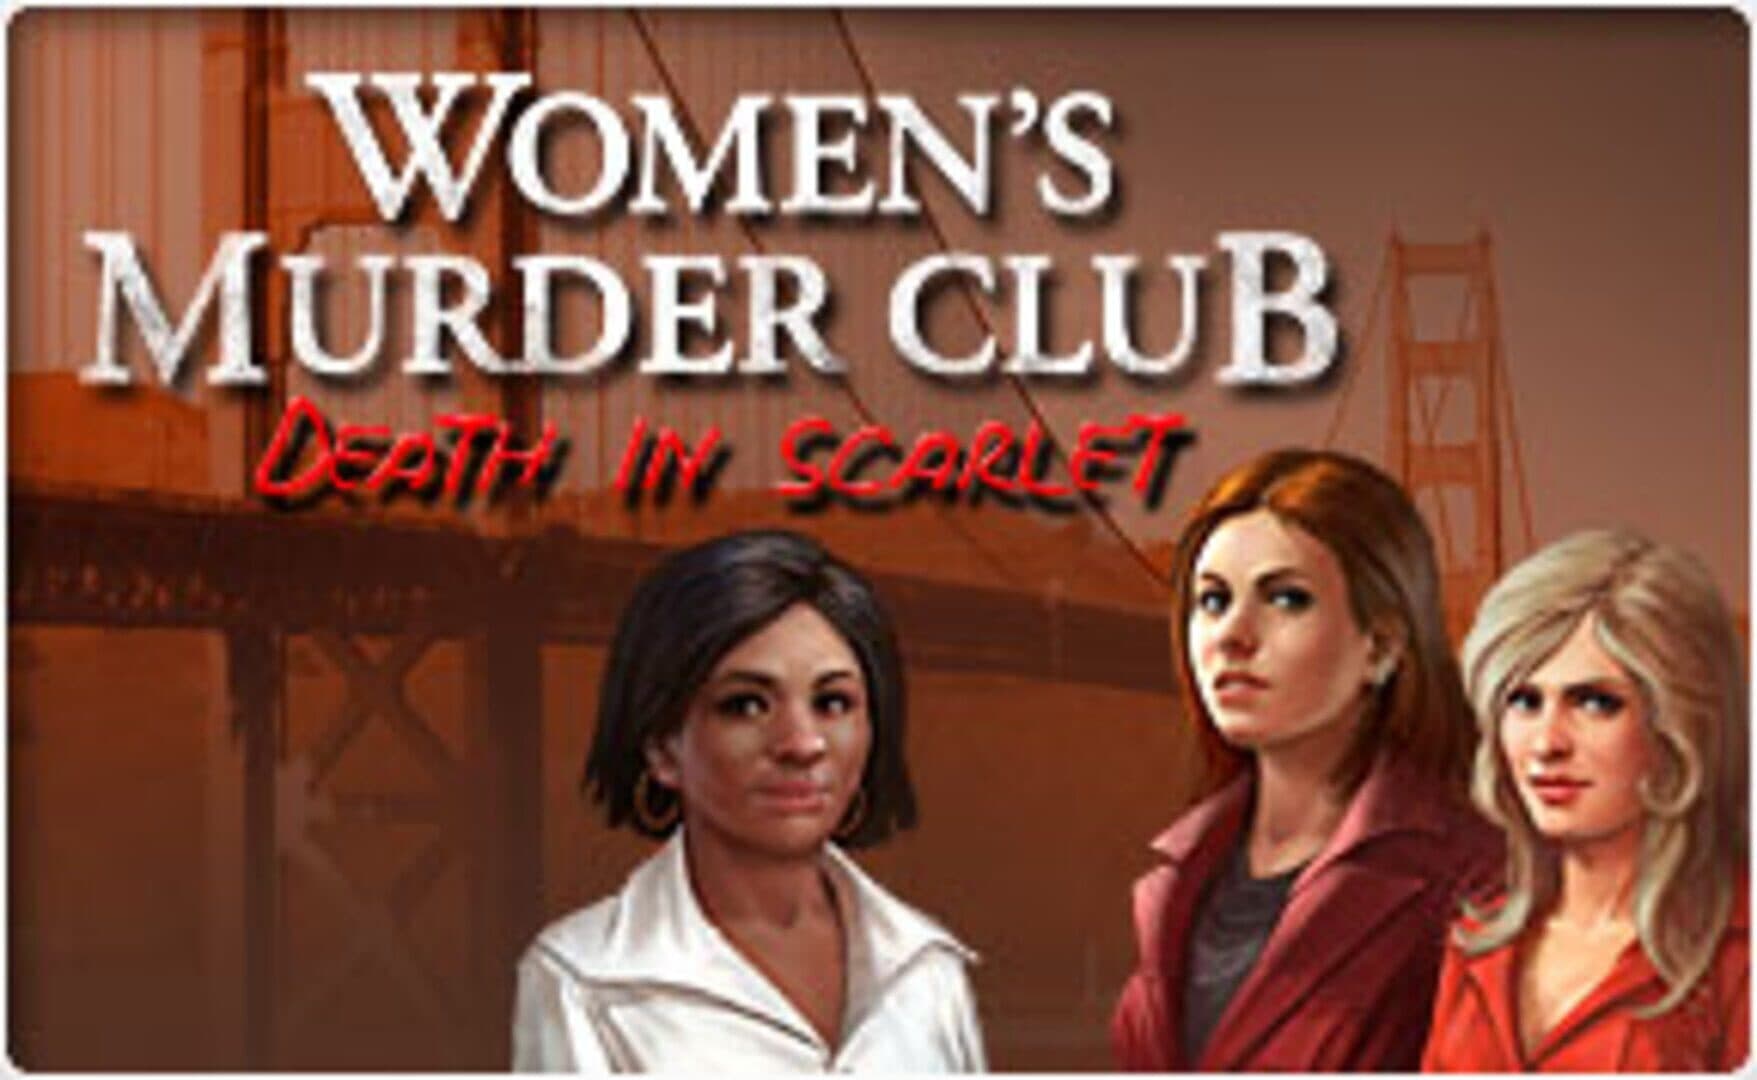 James Patterson's Women's Murder Club: Death in Scarlet cover art